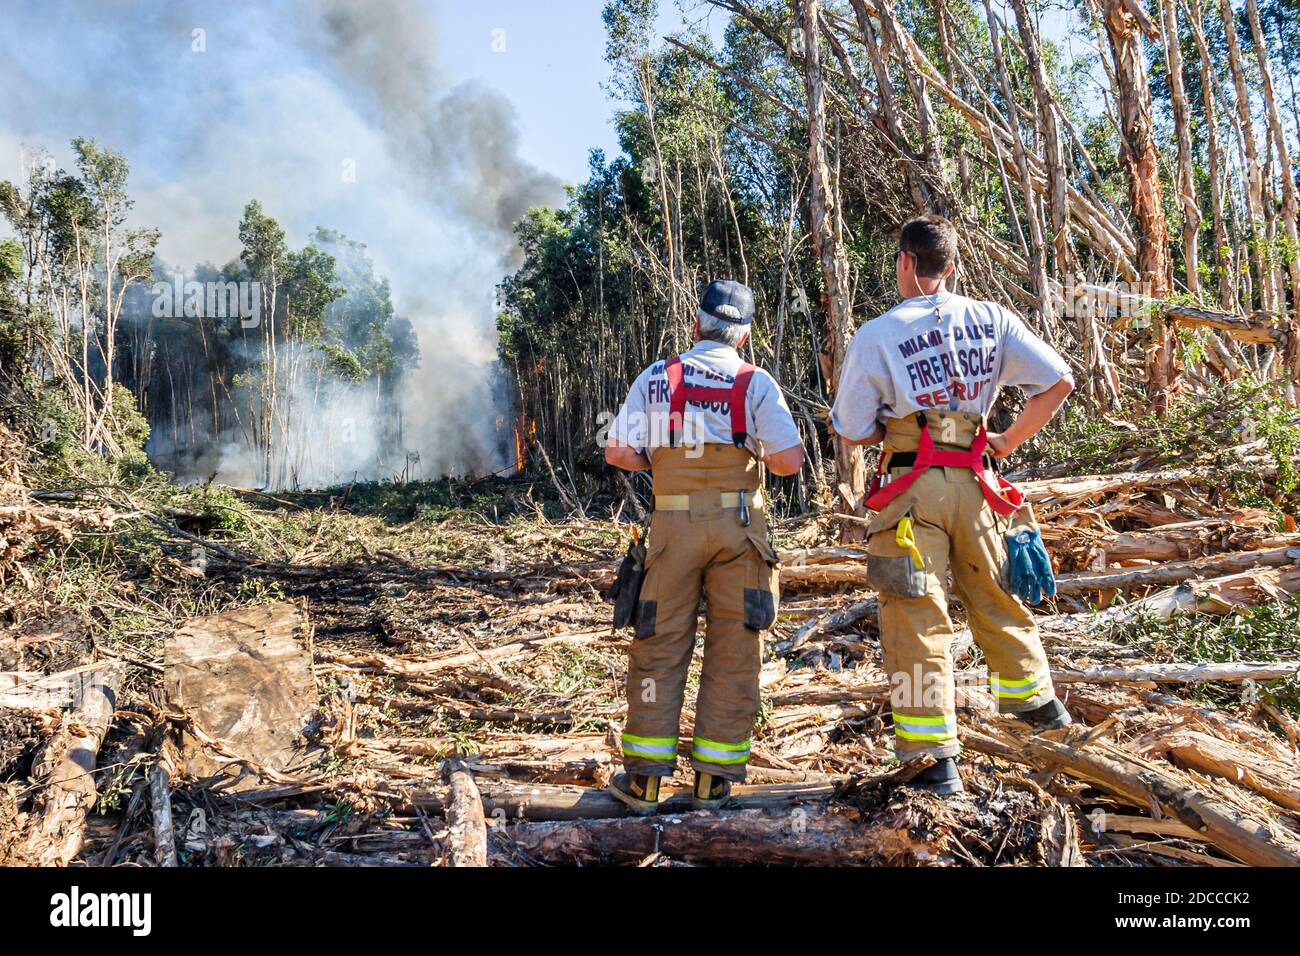 Miami Florida,Pennsuco West Okeechobee Road,fire damaged trees ash controlled burn,firemen fireman firefighters Everglades edge, Stock Photo